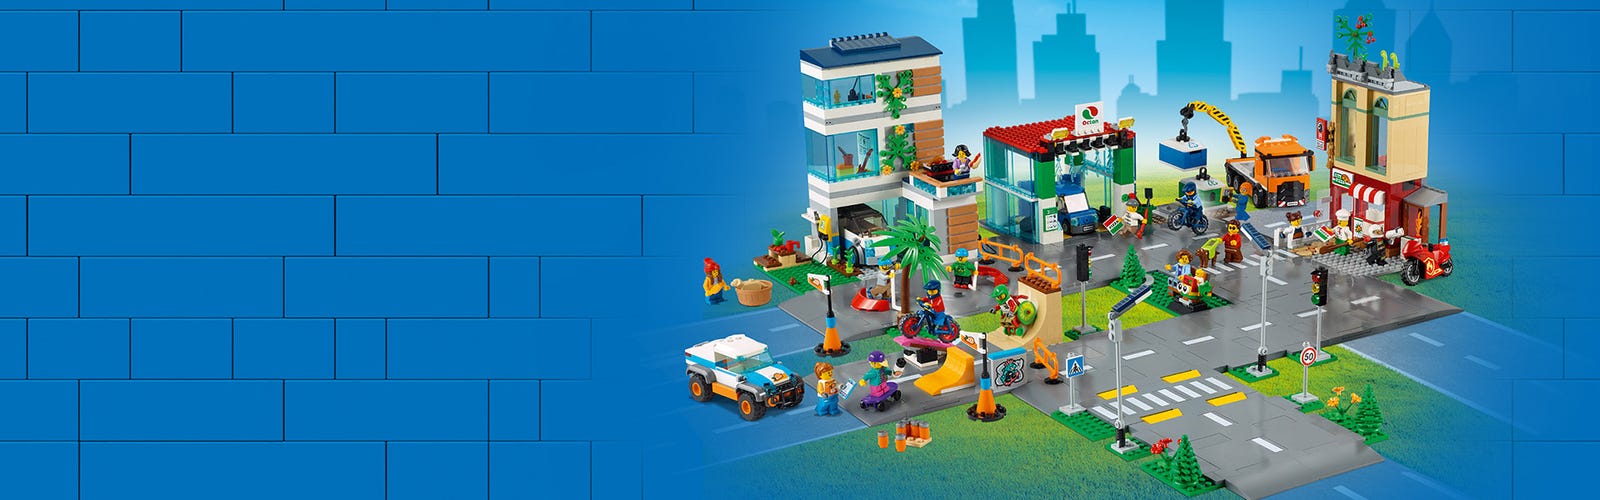 Skate Park 60290 | City | Buy online at the Official LEGO® Shop US